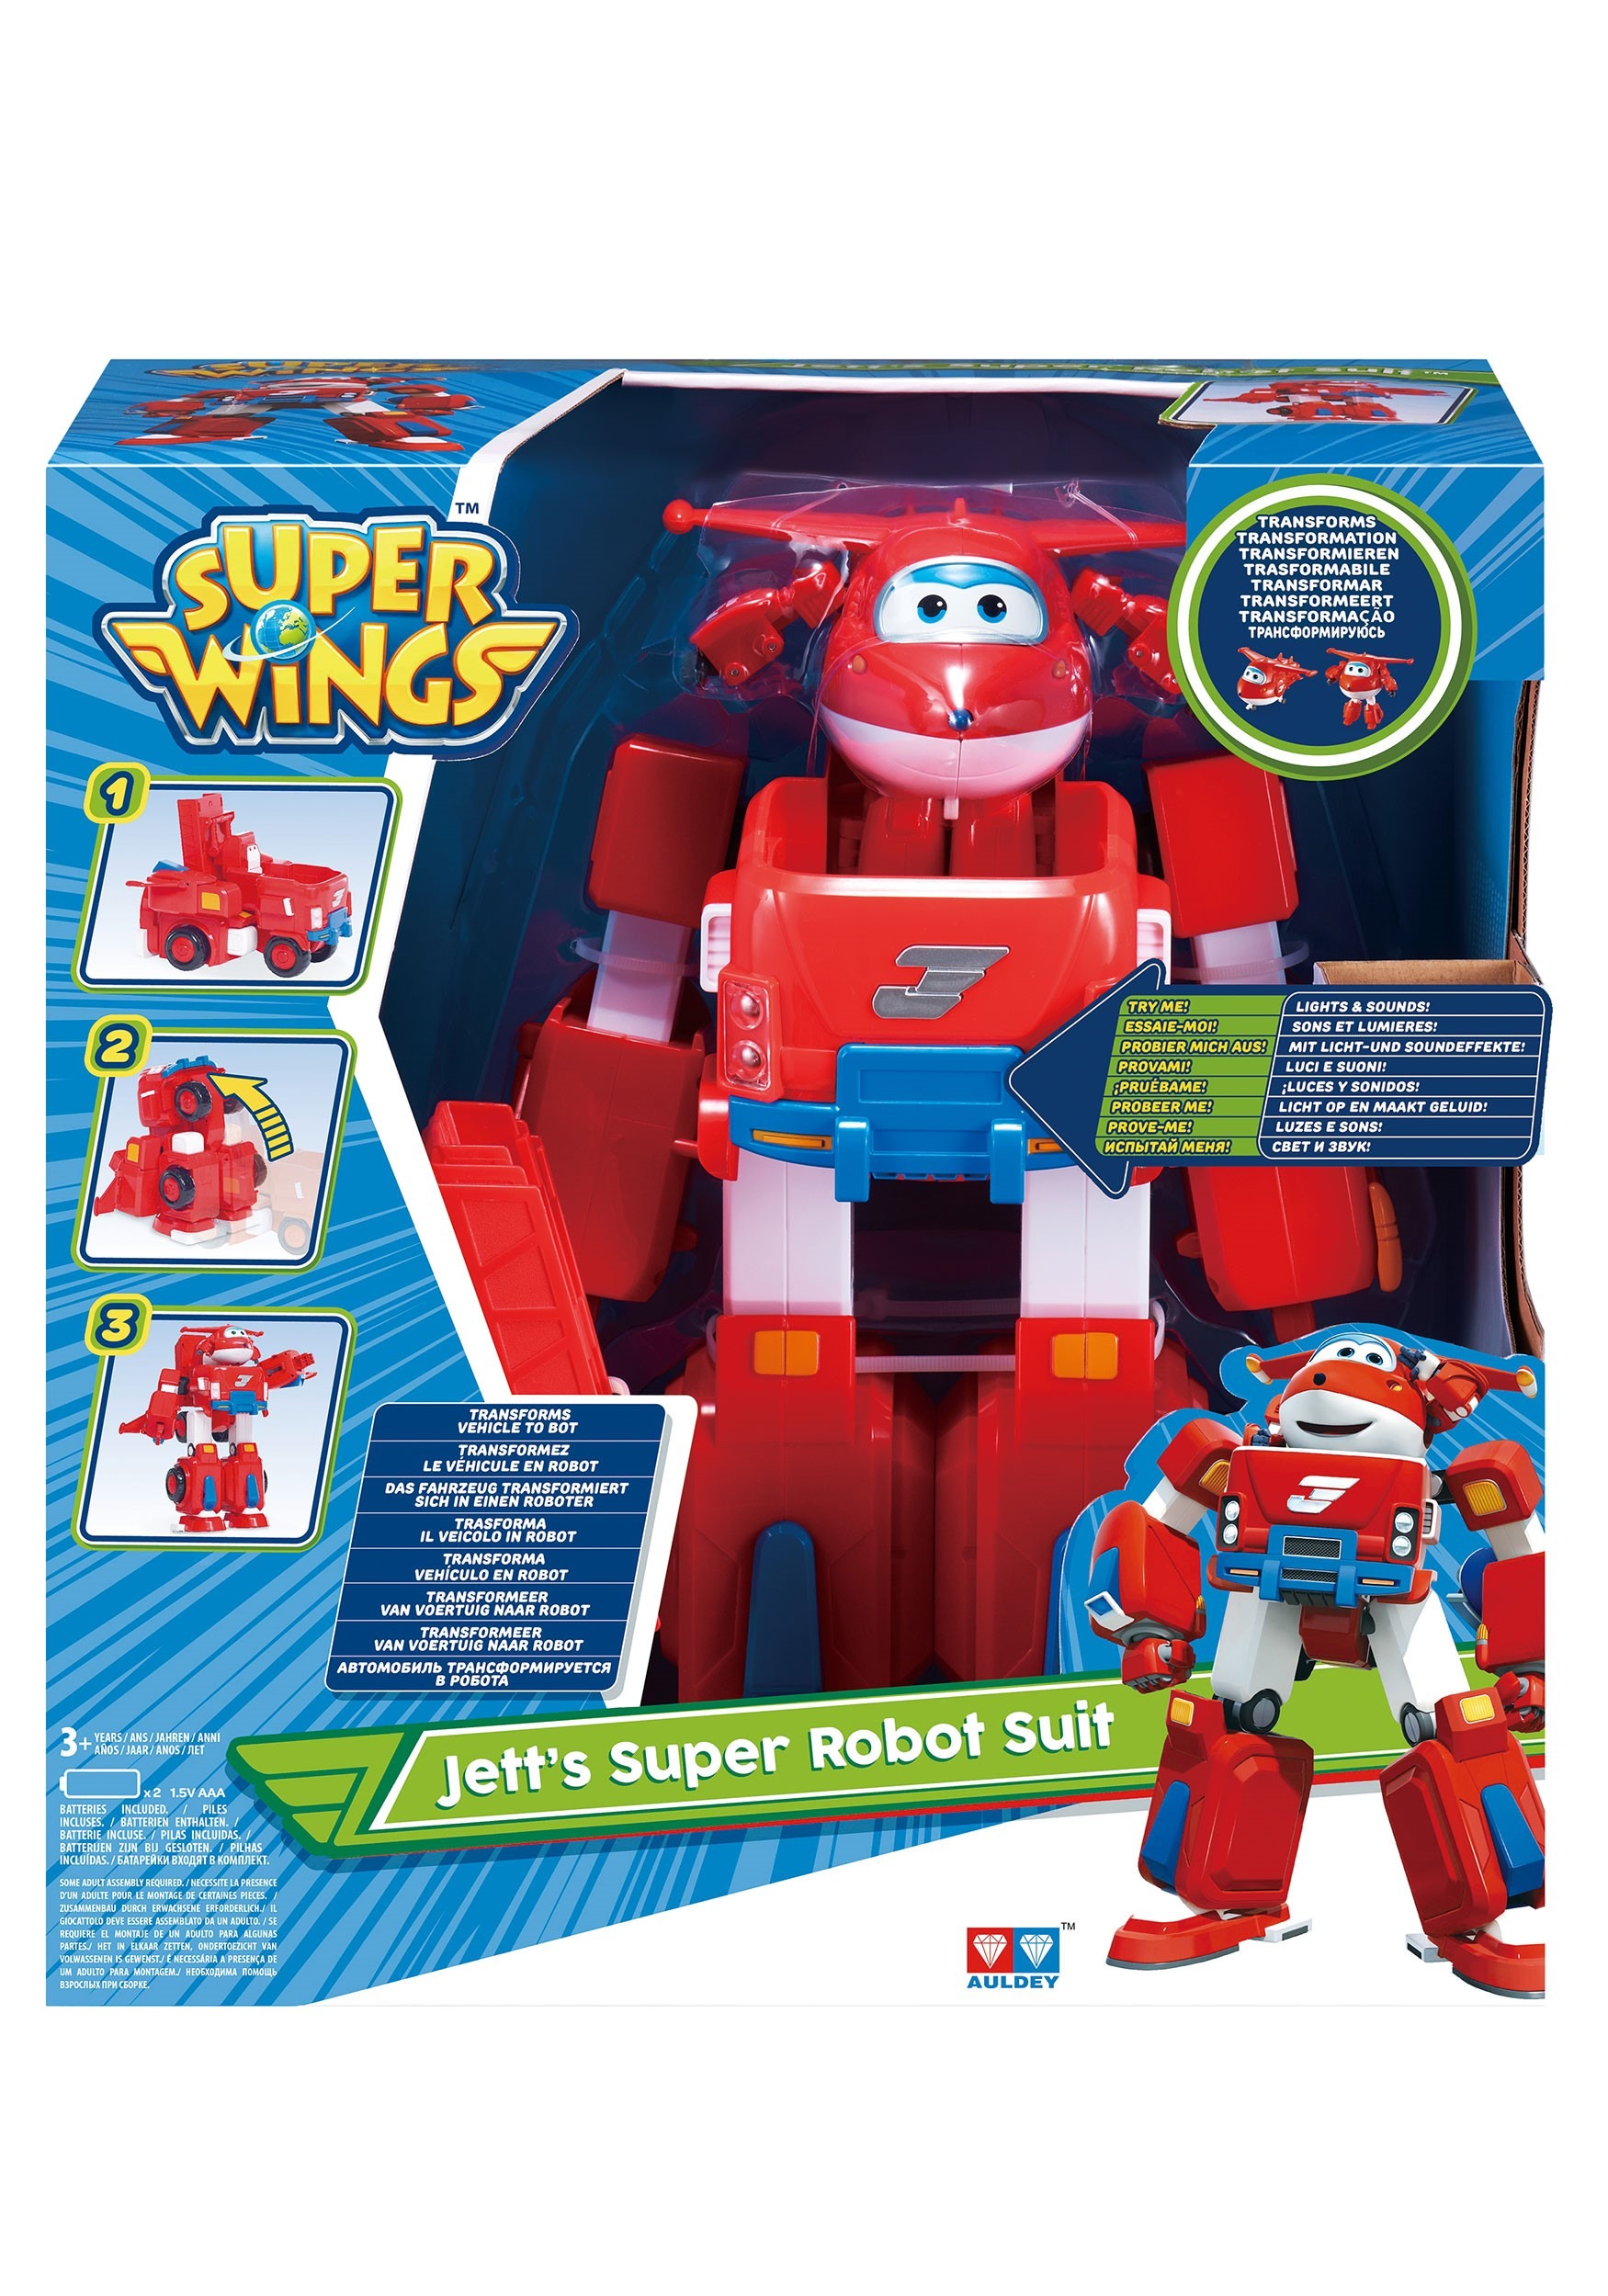 Super Wings Jetts Super Robot Suit Playset